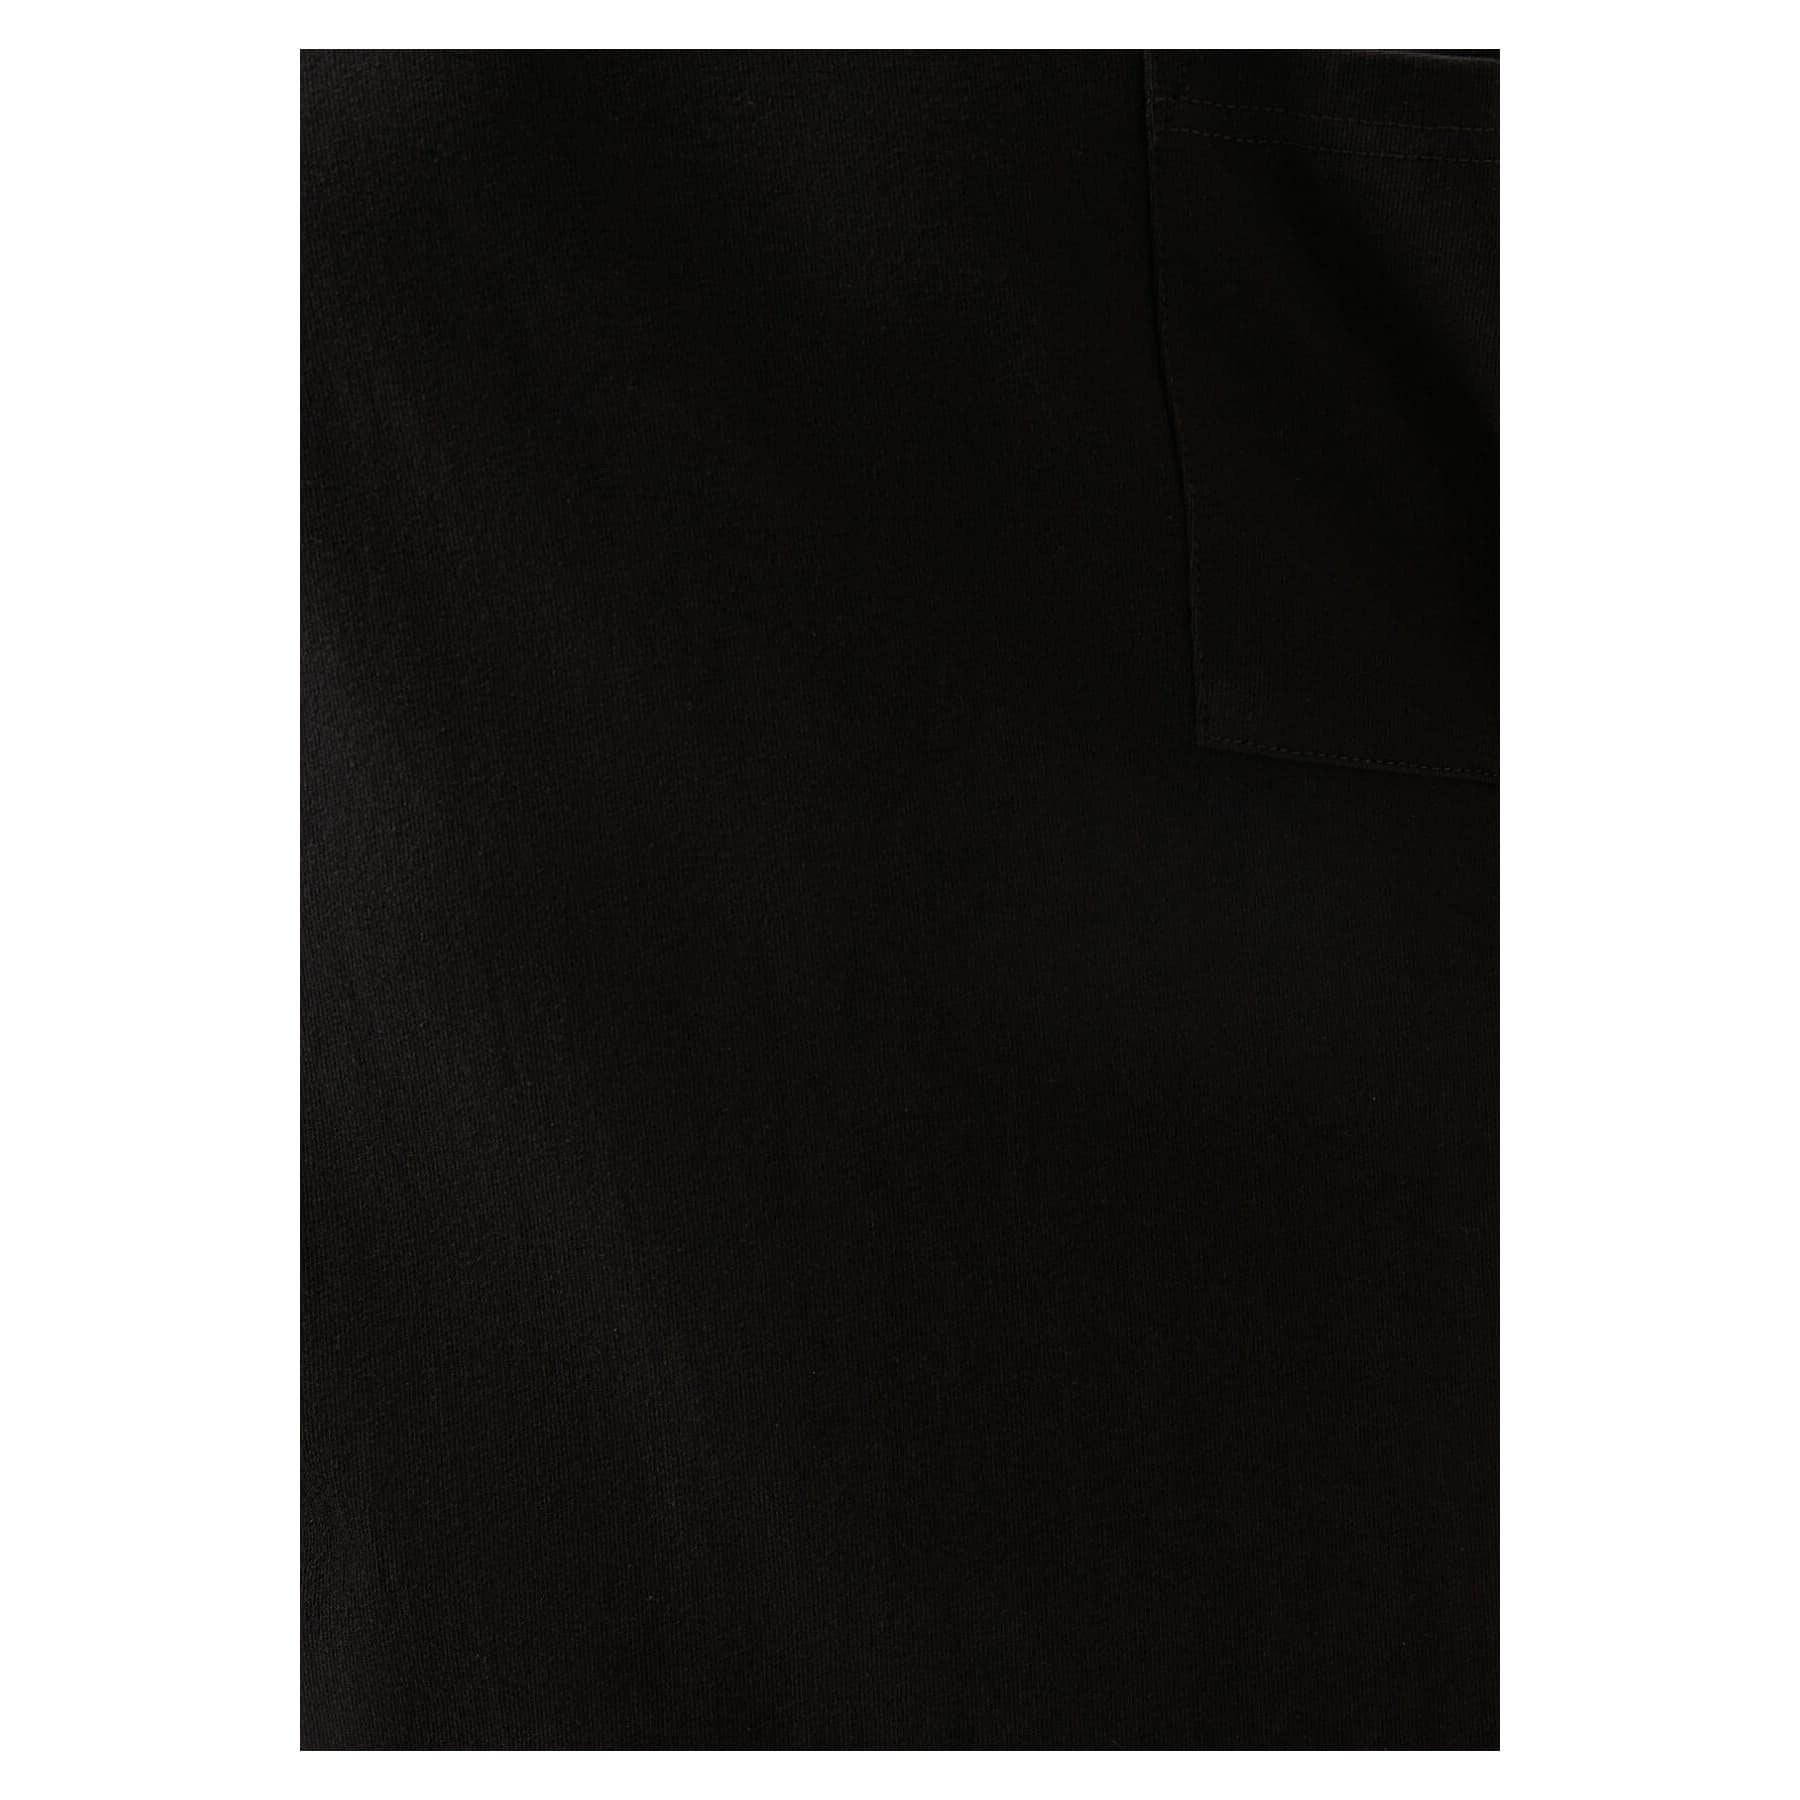 Mavi Jeans Cepli Siyah Basic Tişört (066248-900)